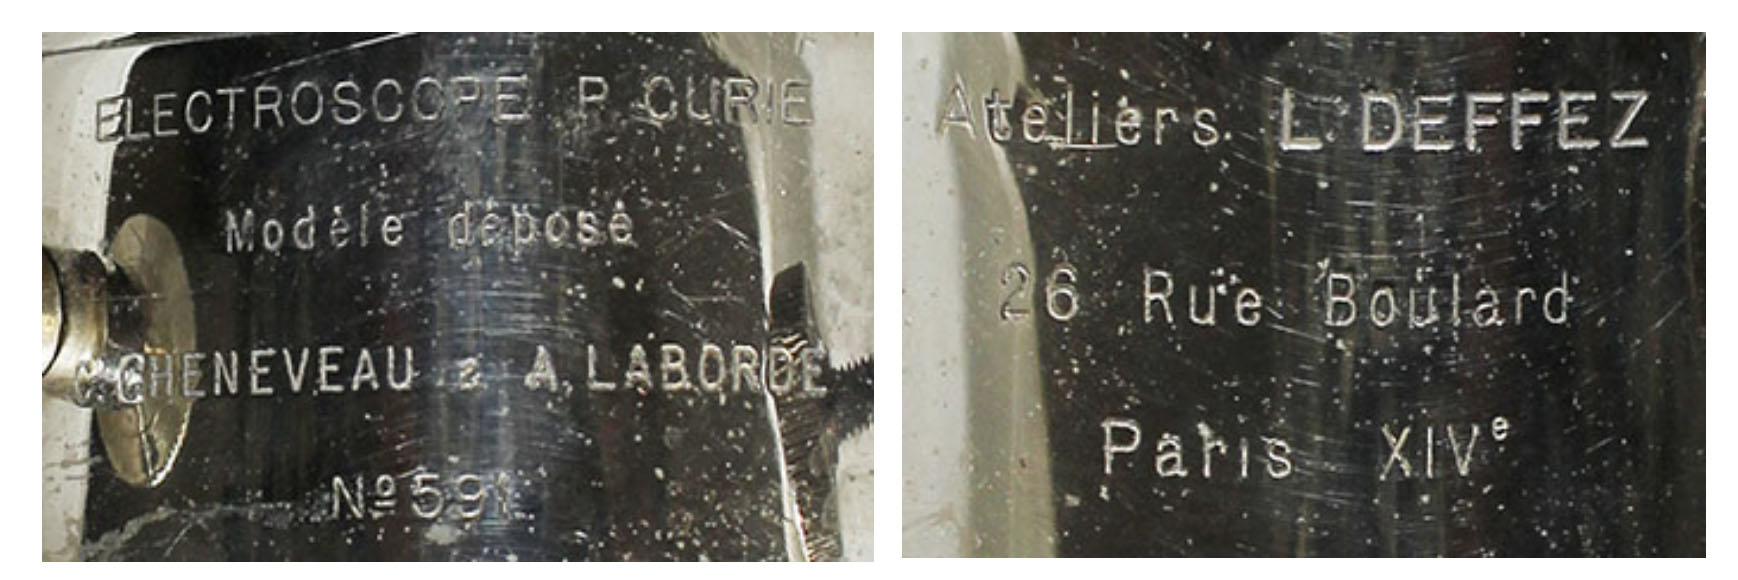 Cheneveau Laborde electroscope engraving